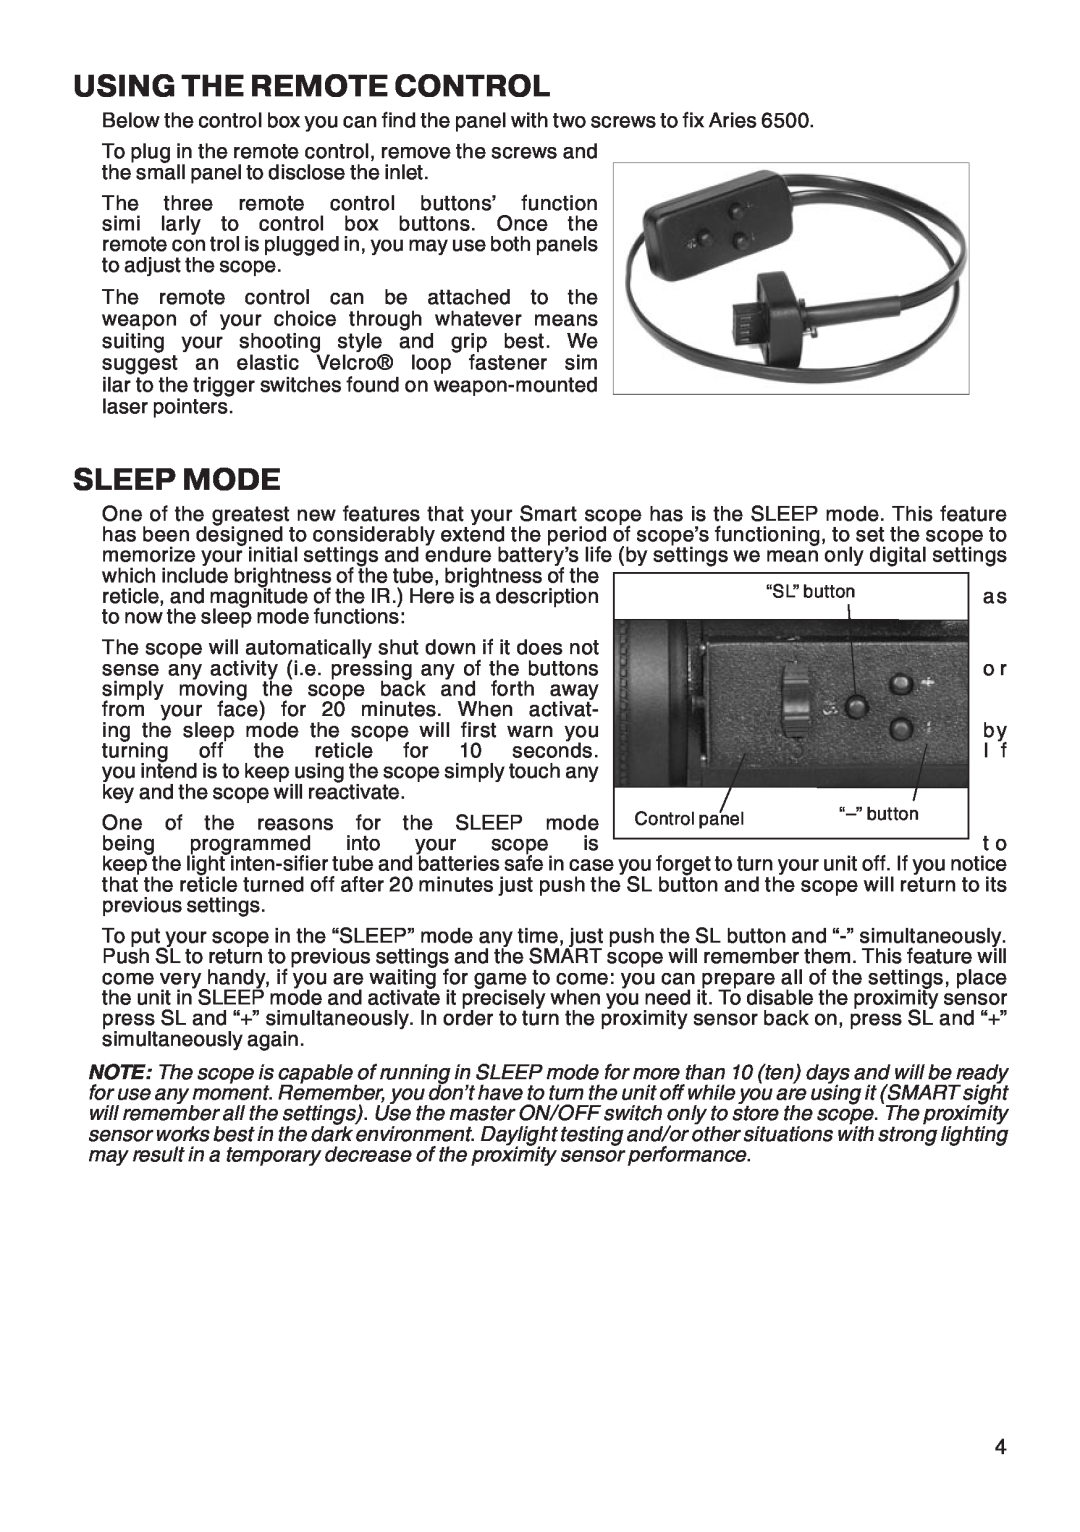 ATN Mk6500 manual Using The Remote Control, Sleep Mode 